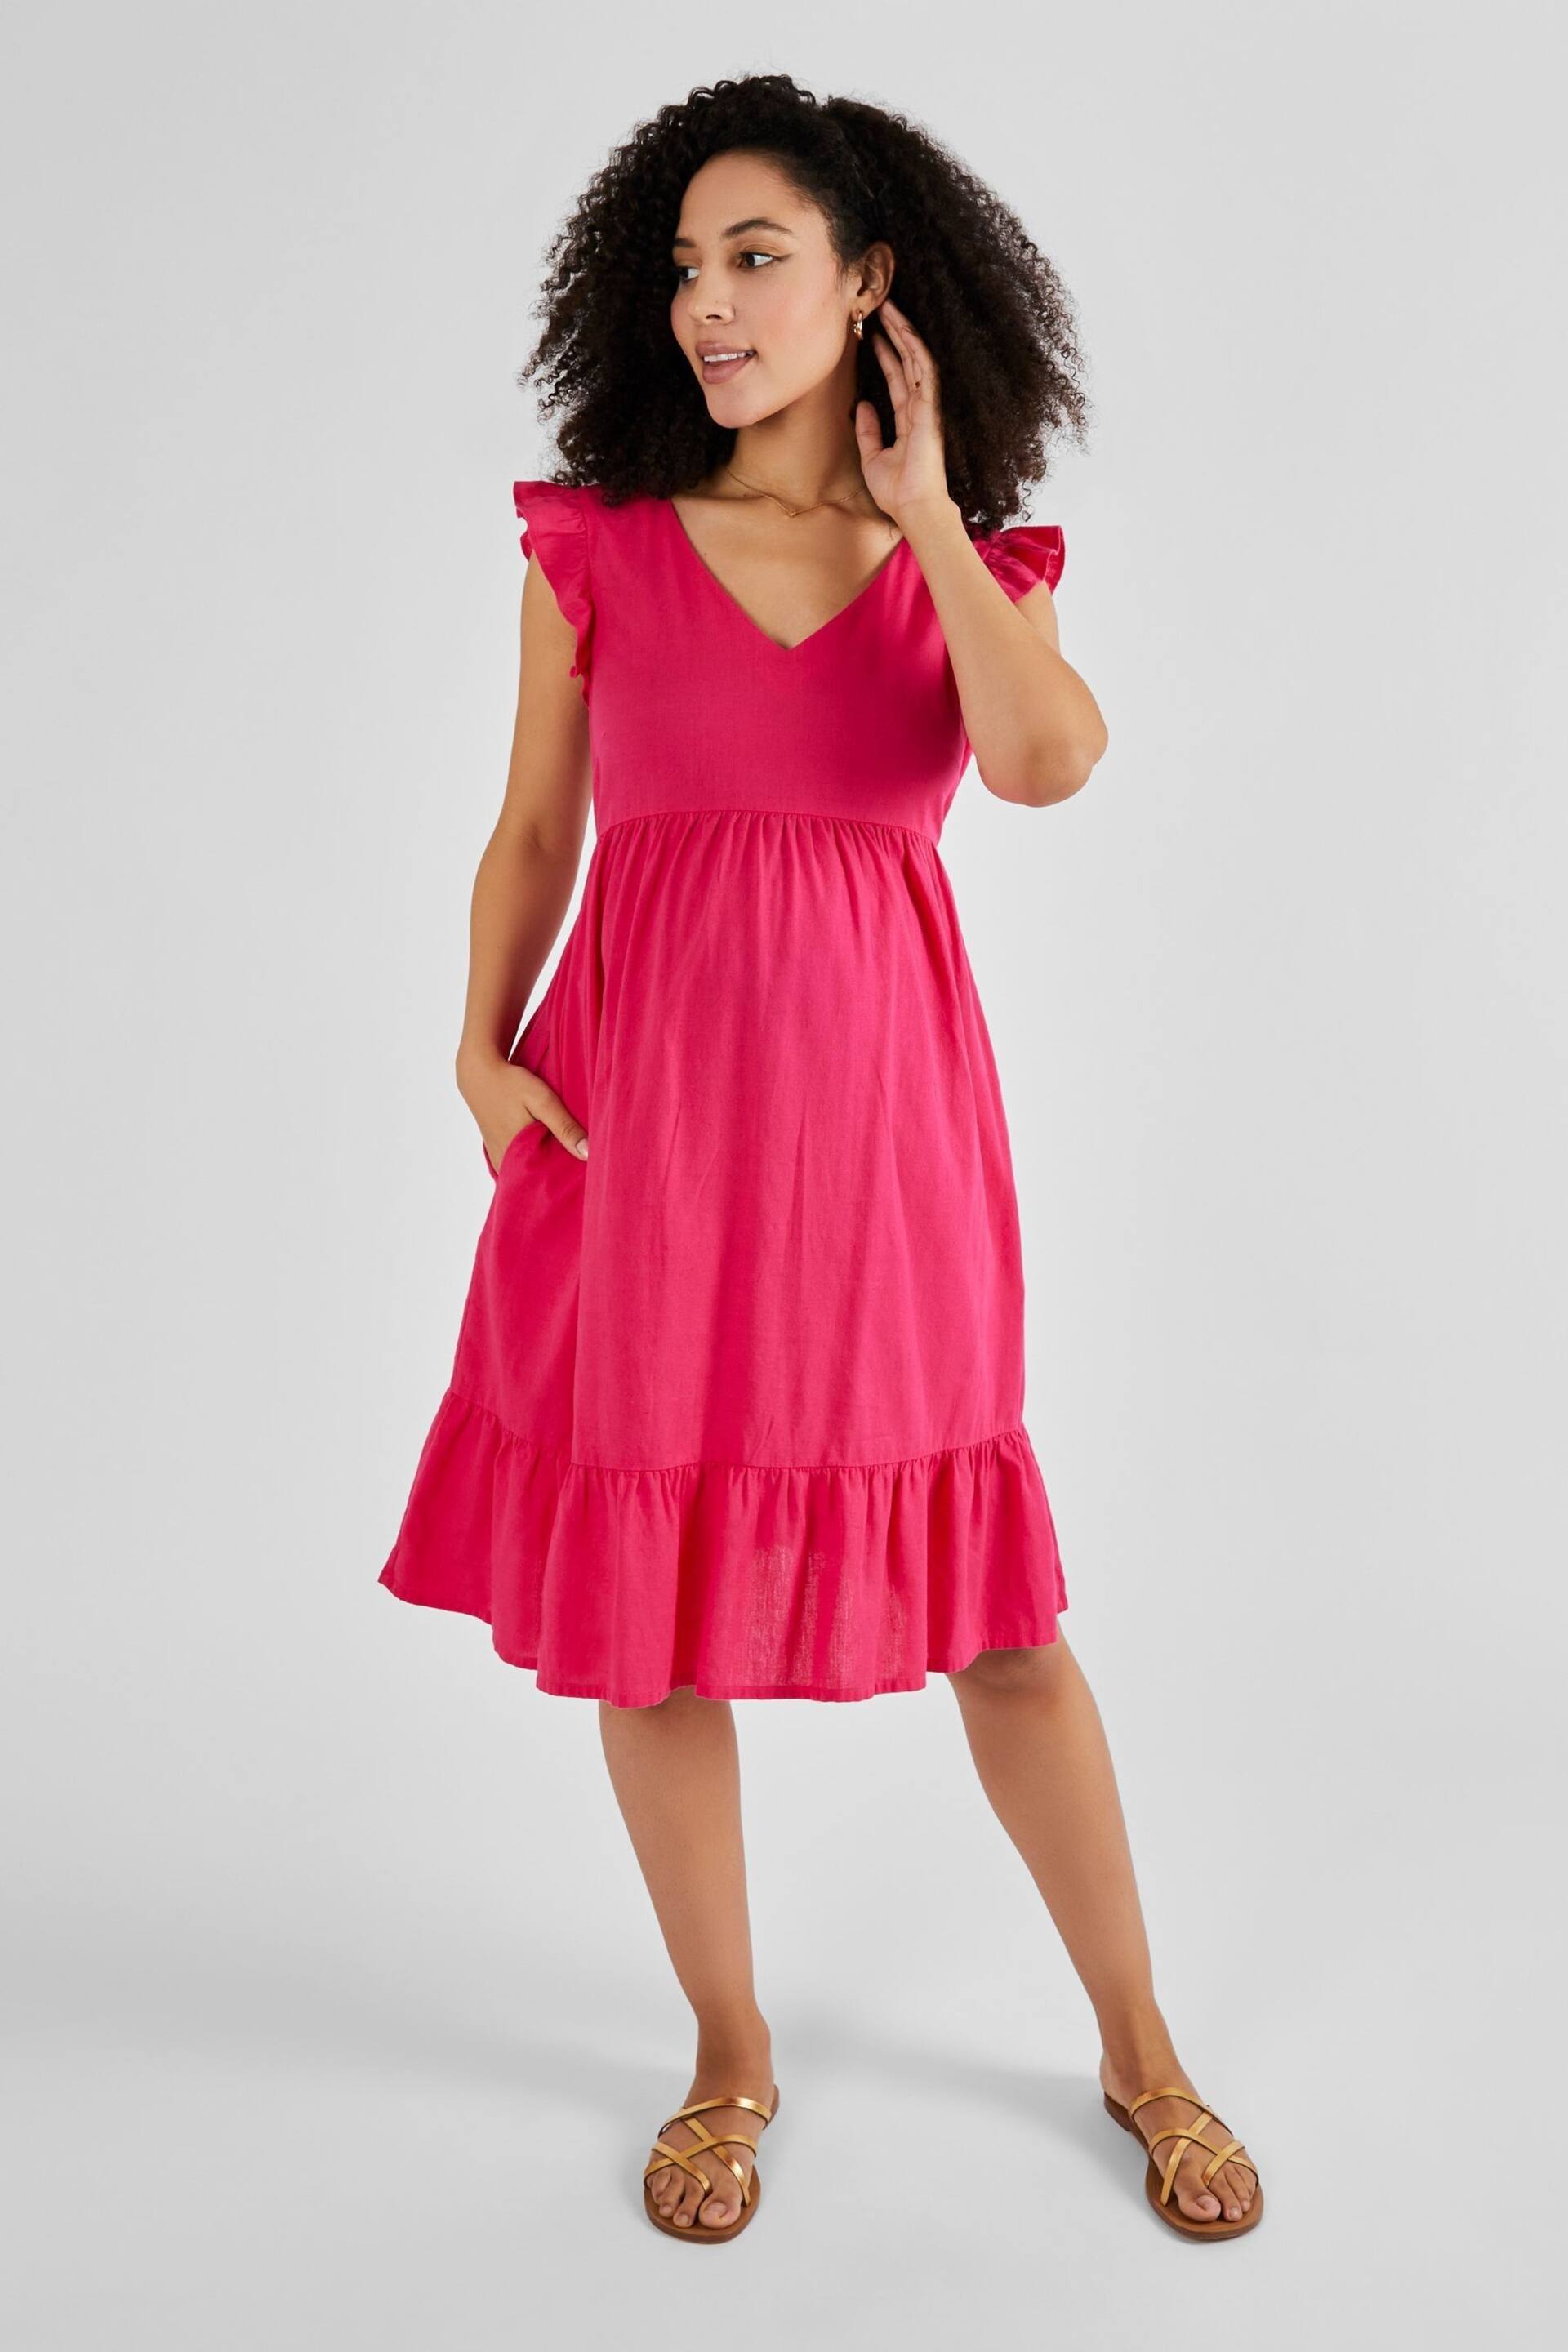 JoJo Maman Bébé Pink Linen Blend Frill Sleeve Maternity Dress - Image 1 of 4